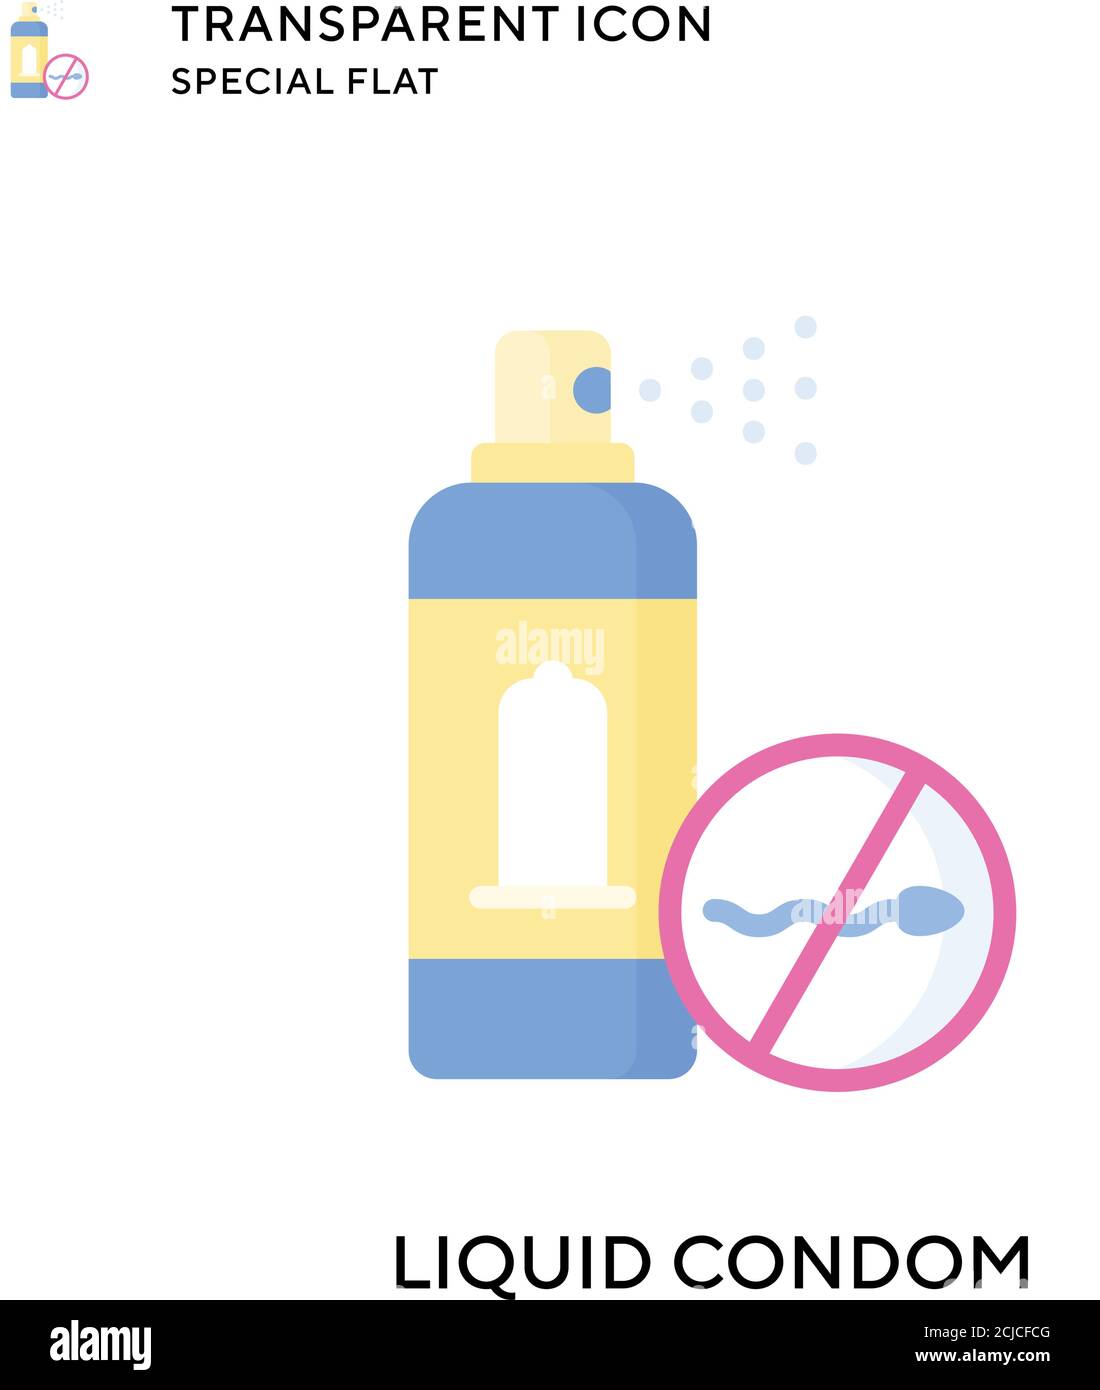 Liquid condom vector icon. Flat style illustration. EPS 10 vector. Stock Vector